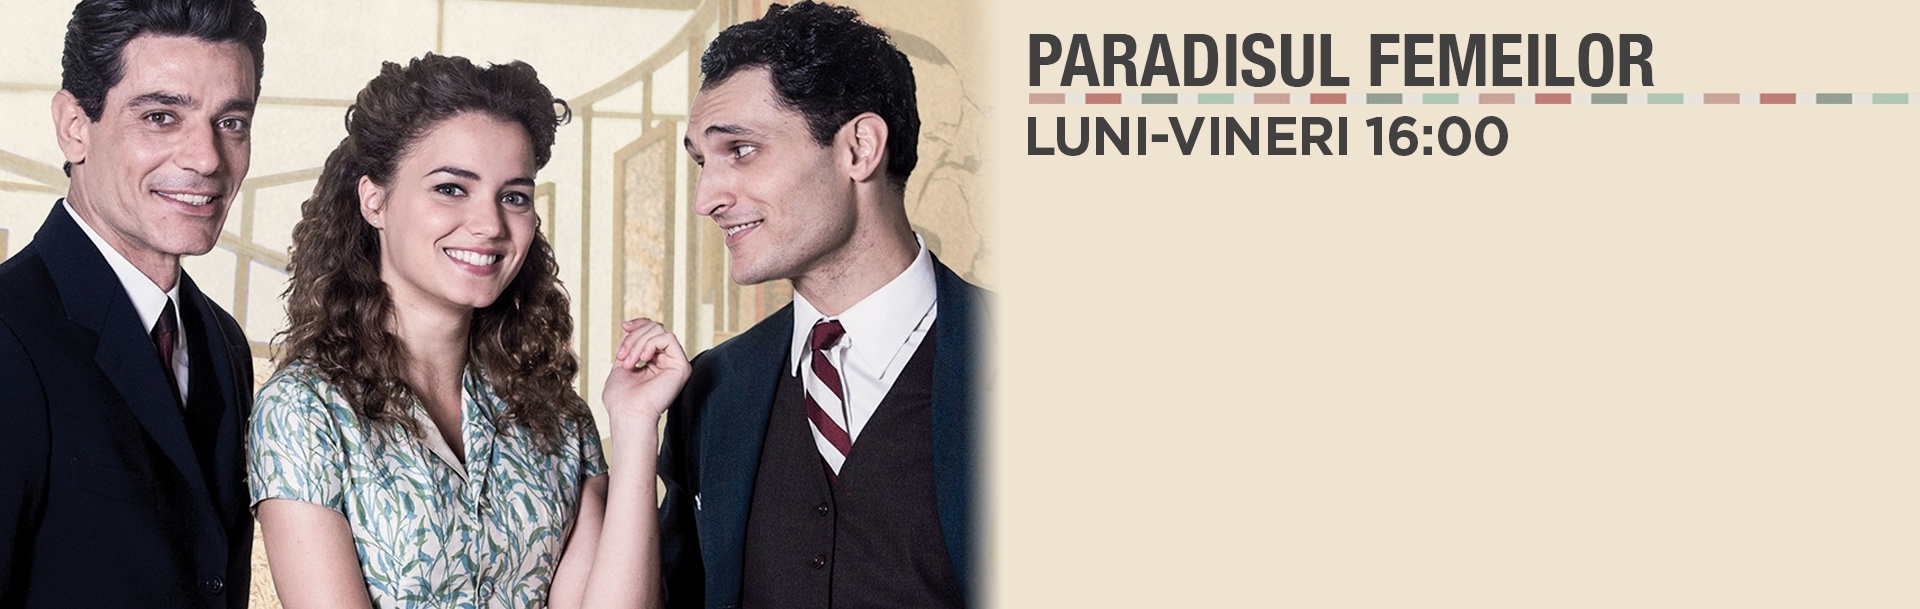 primatv seriale italiene paradisul femeilor